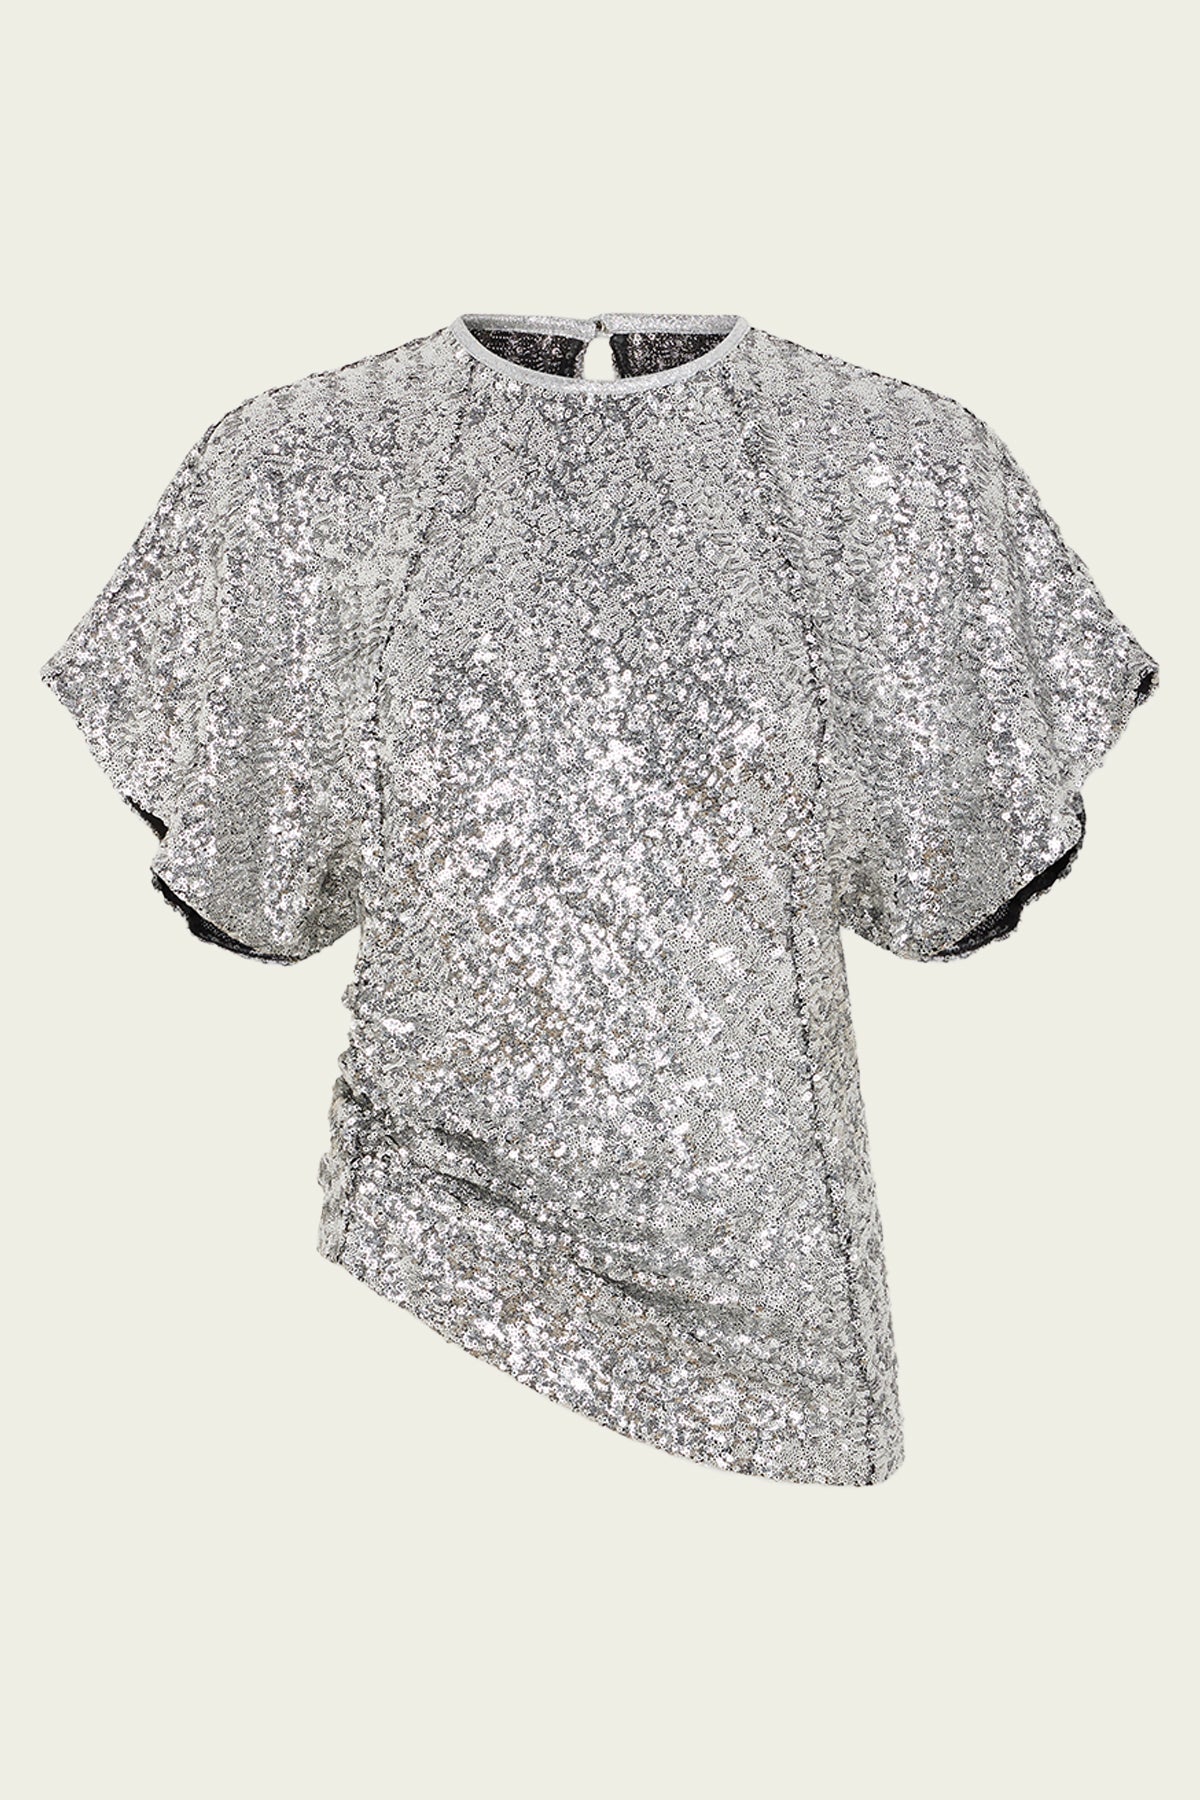 Asymmetrical Draped Sequin Top in Silver - shop-olivia.com